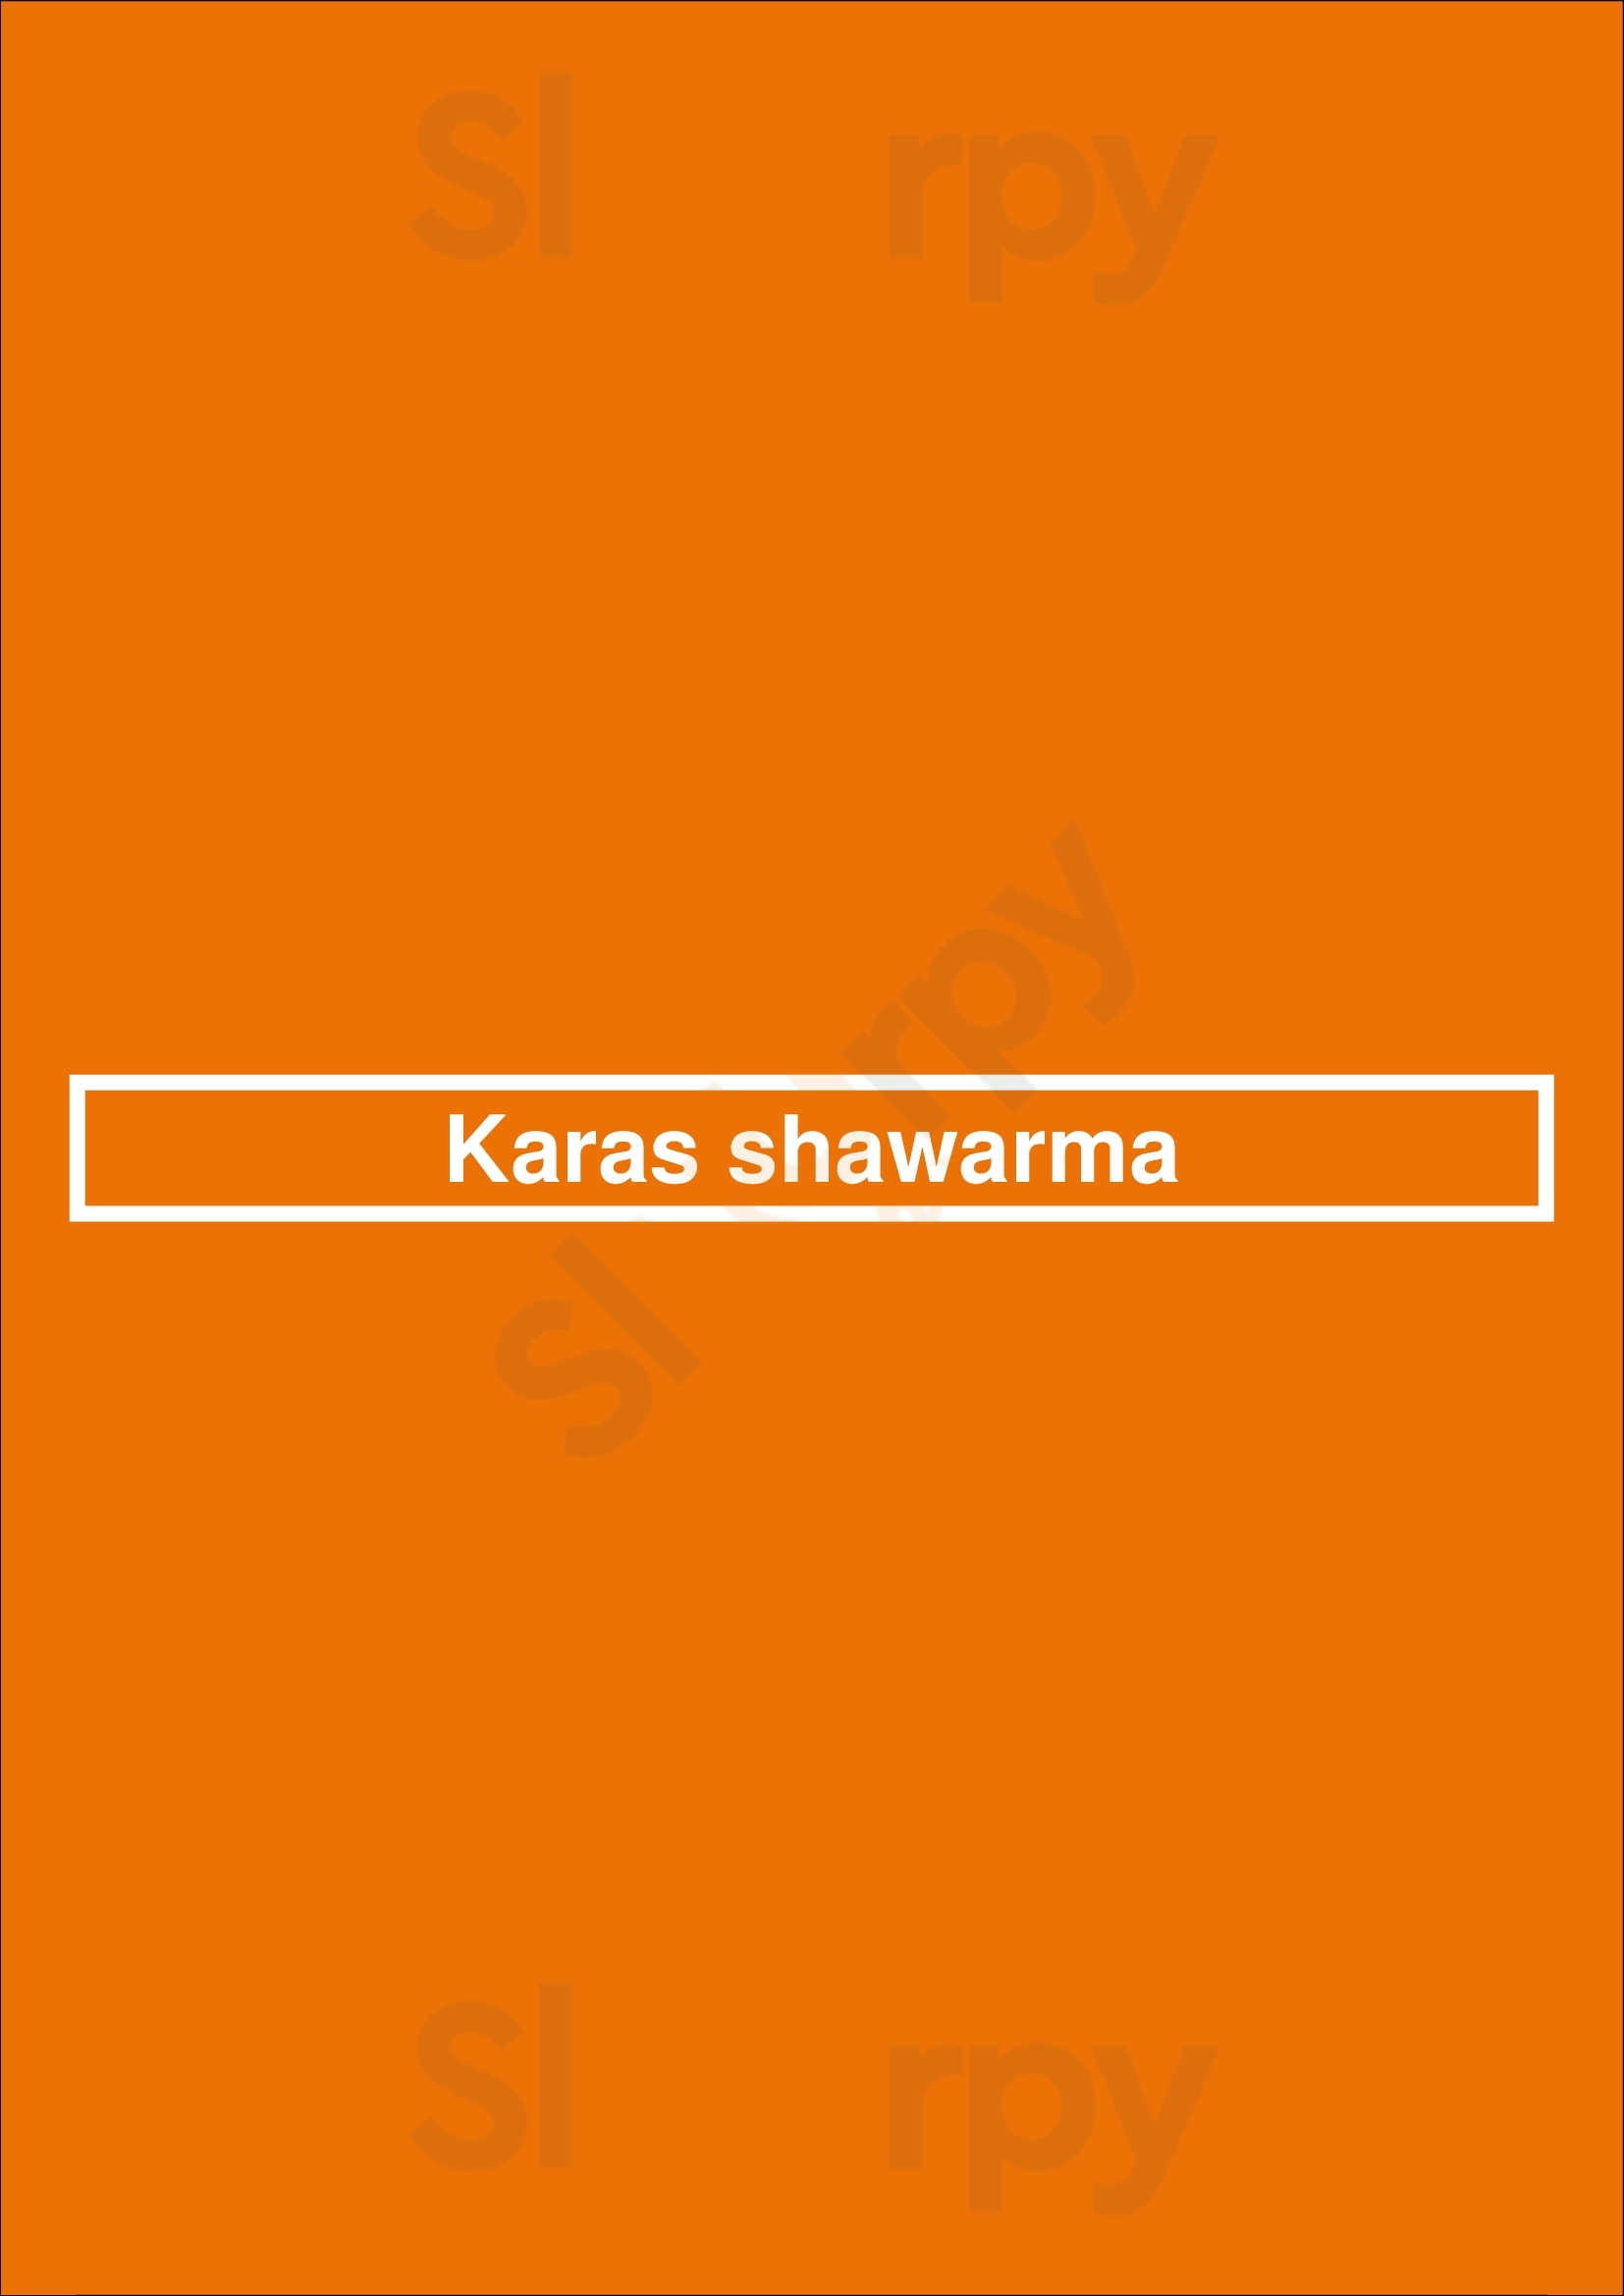 Karas Shawarma Mississauga Menu - 1